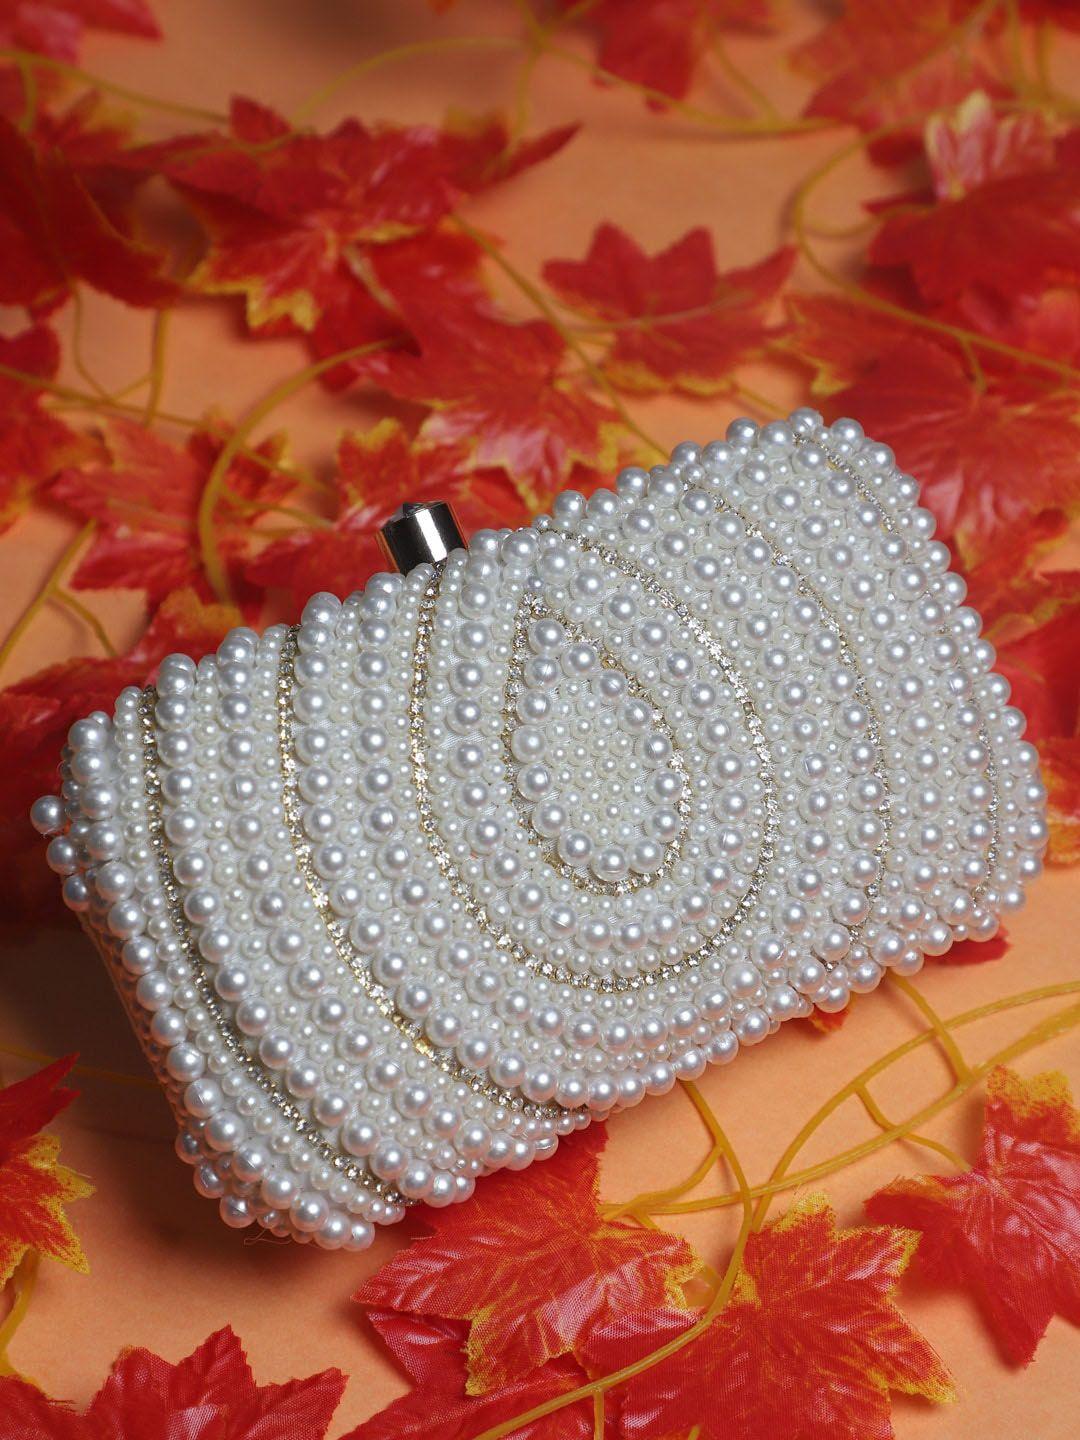 swisni white & silver-toned embellished purse clutch